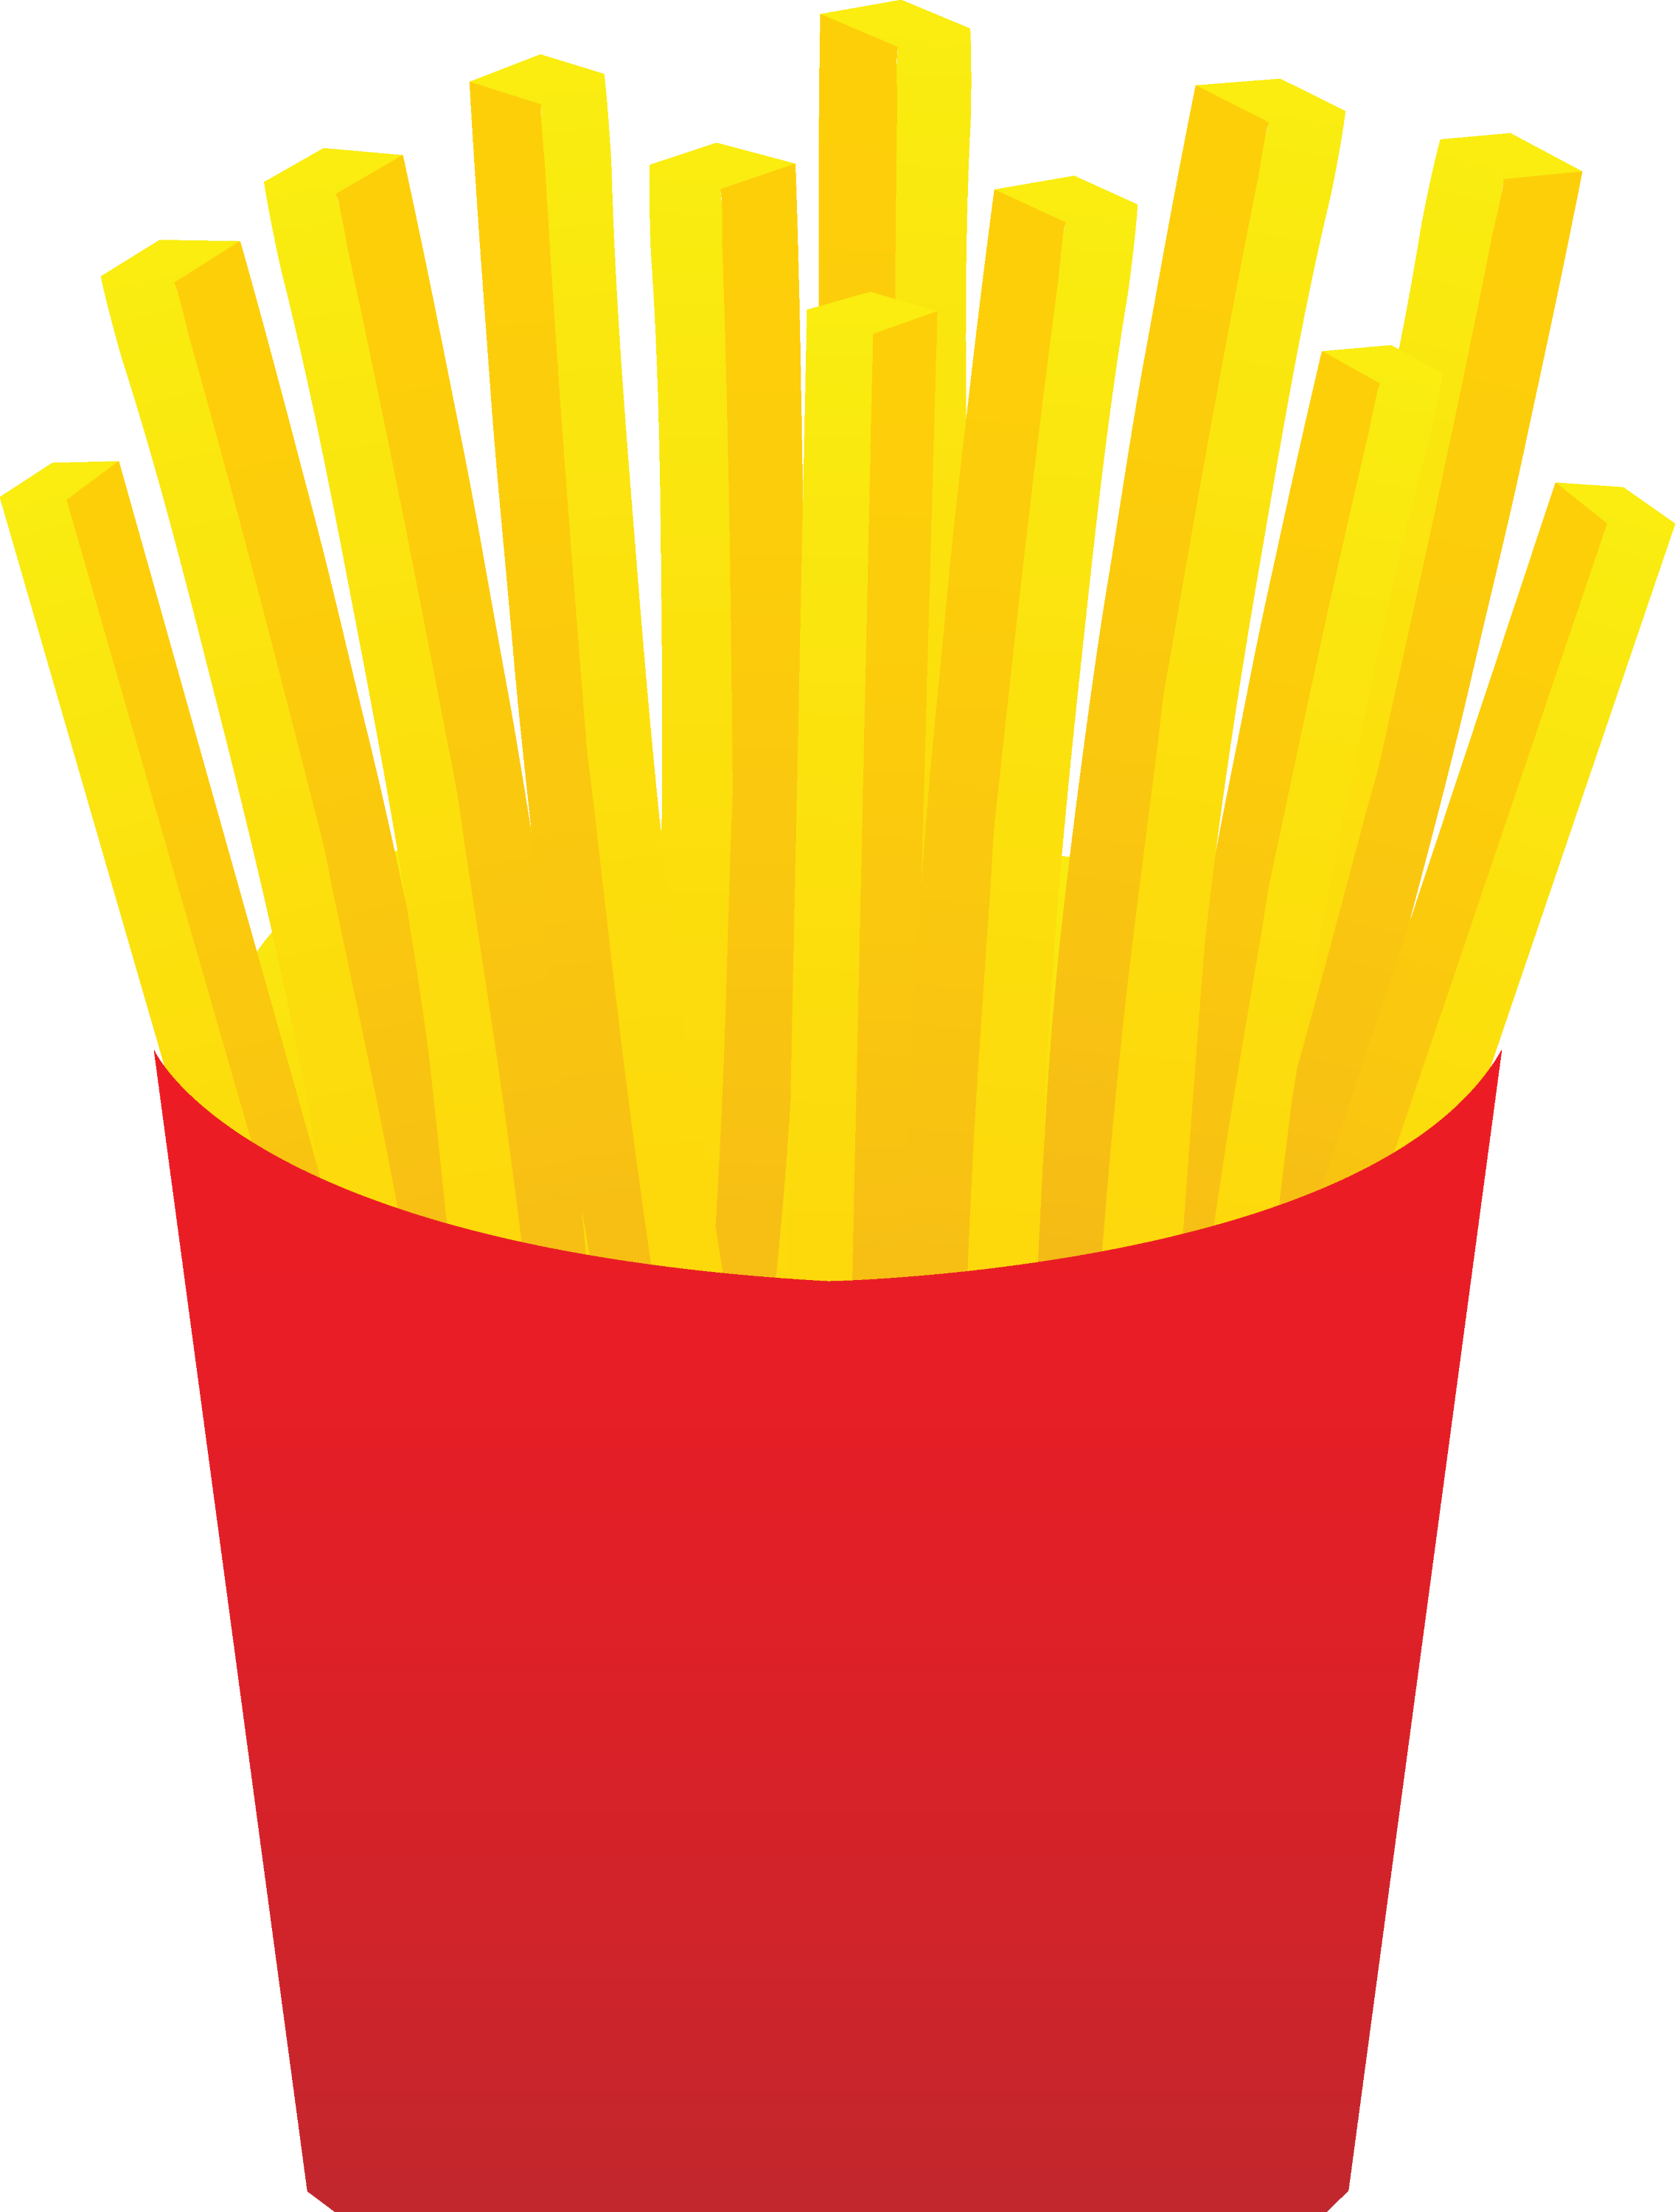 Fast Food French Fries Free Clip Art,Bbq Short Ribs Recipe